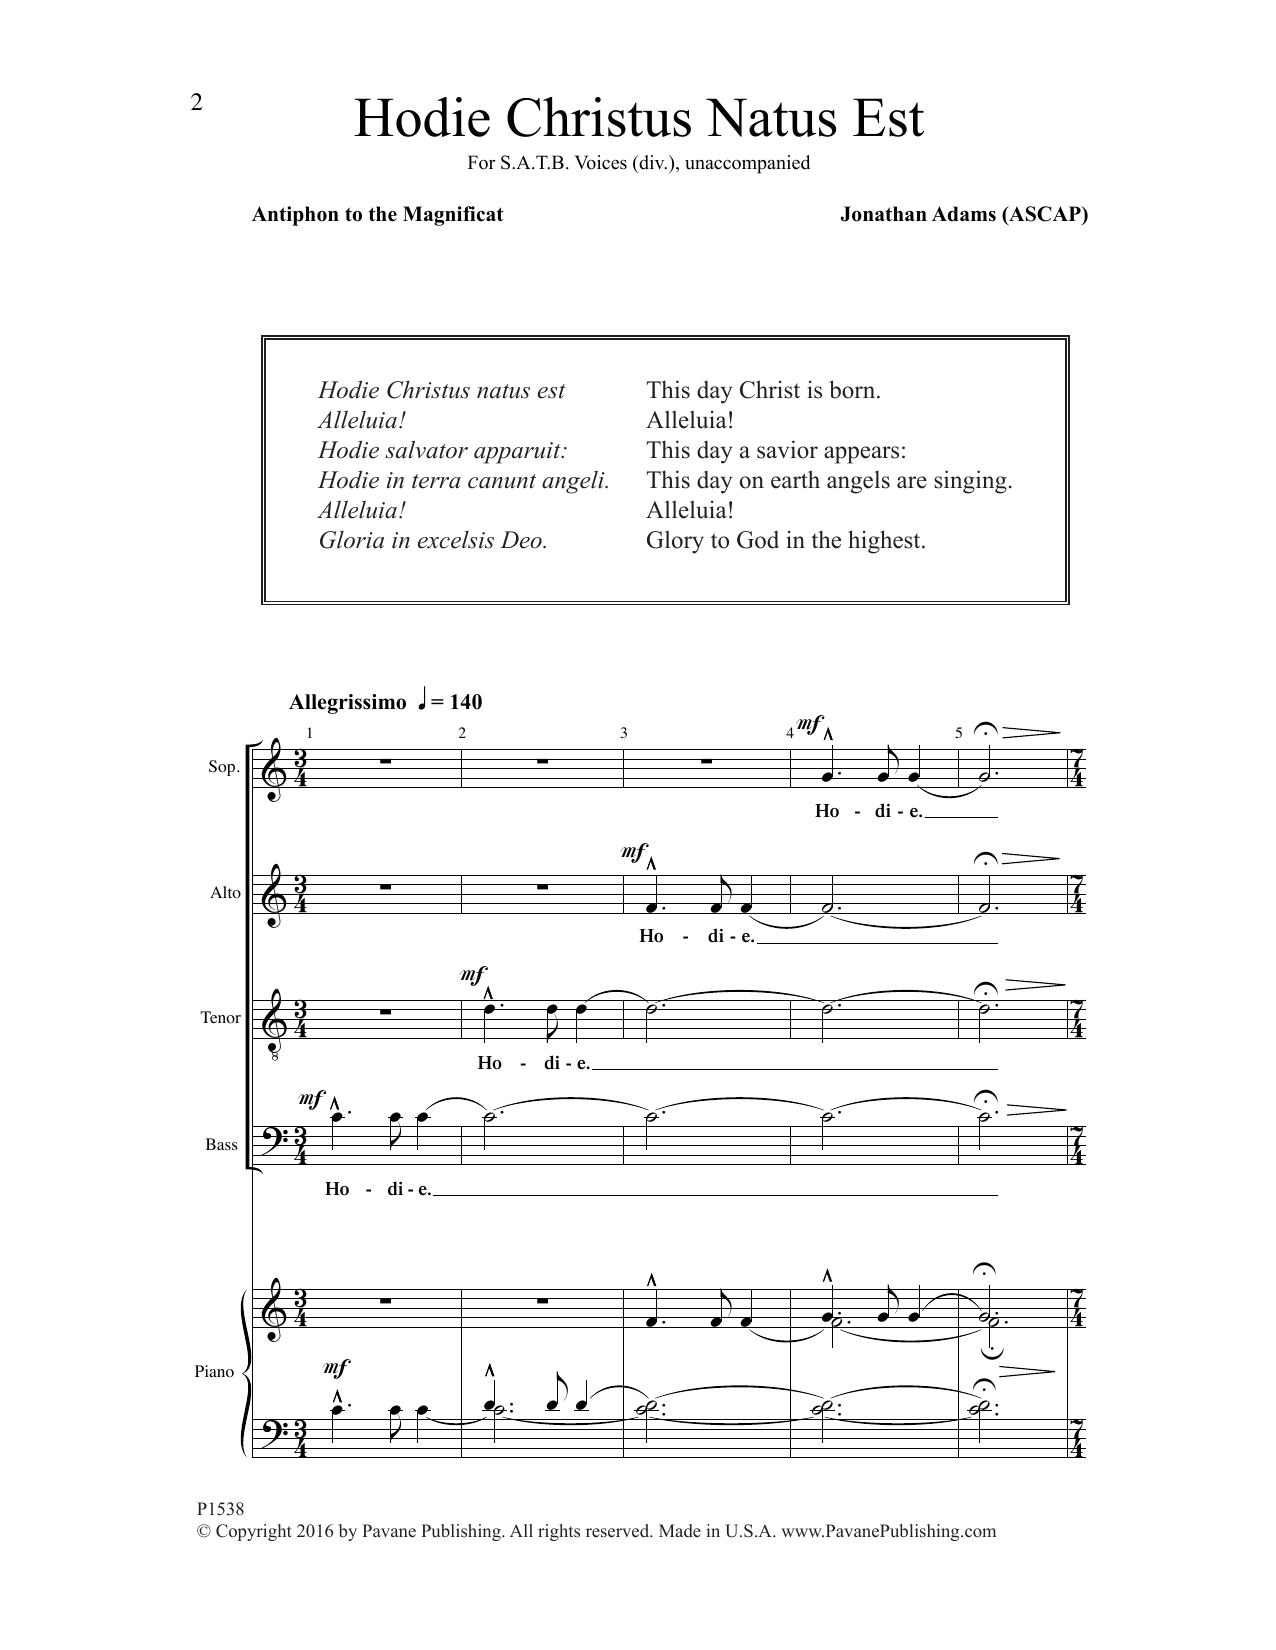 Jonathan Adams Hodie Christus natus est Sheet Music Notes & Chords for Choral - Download or Print PDF